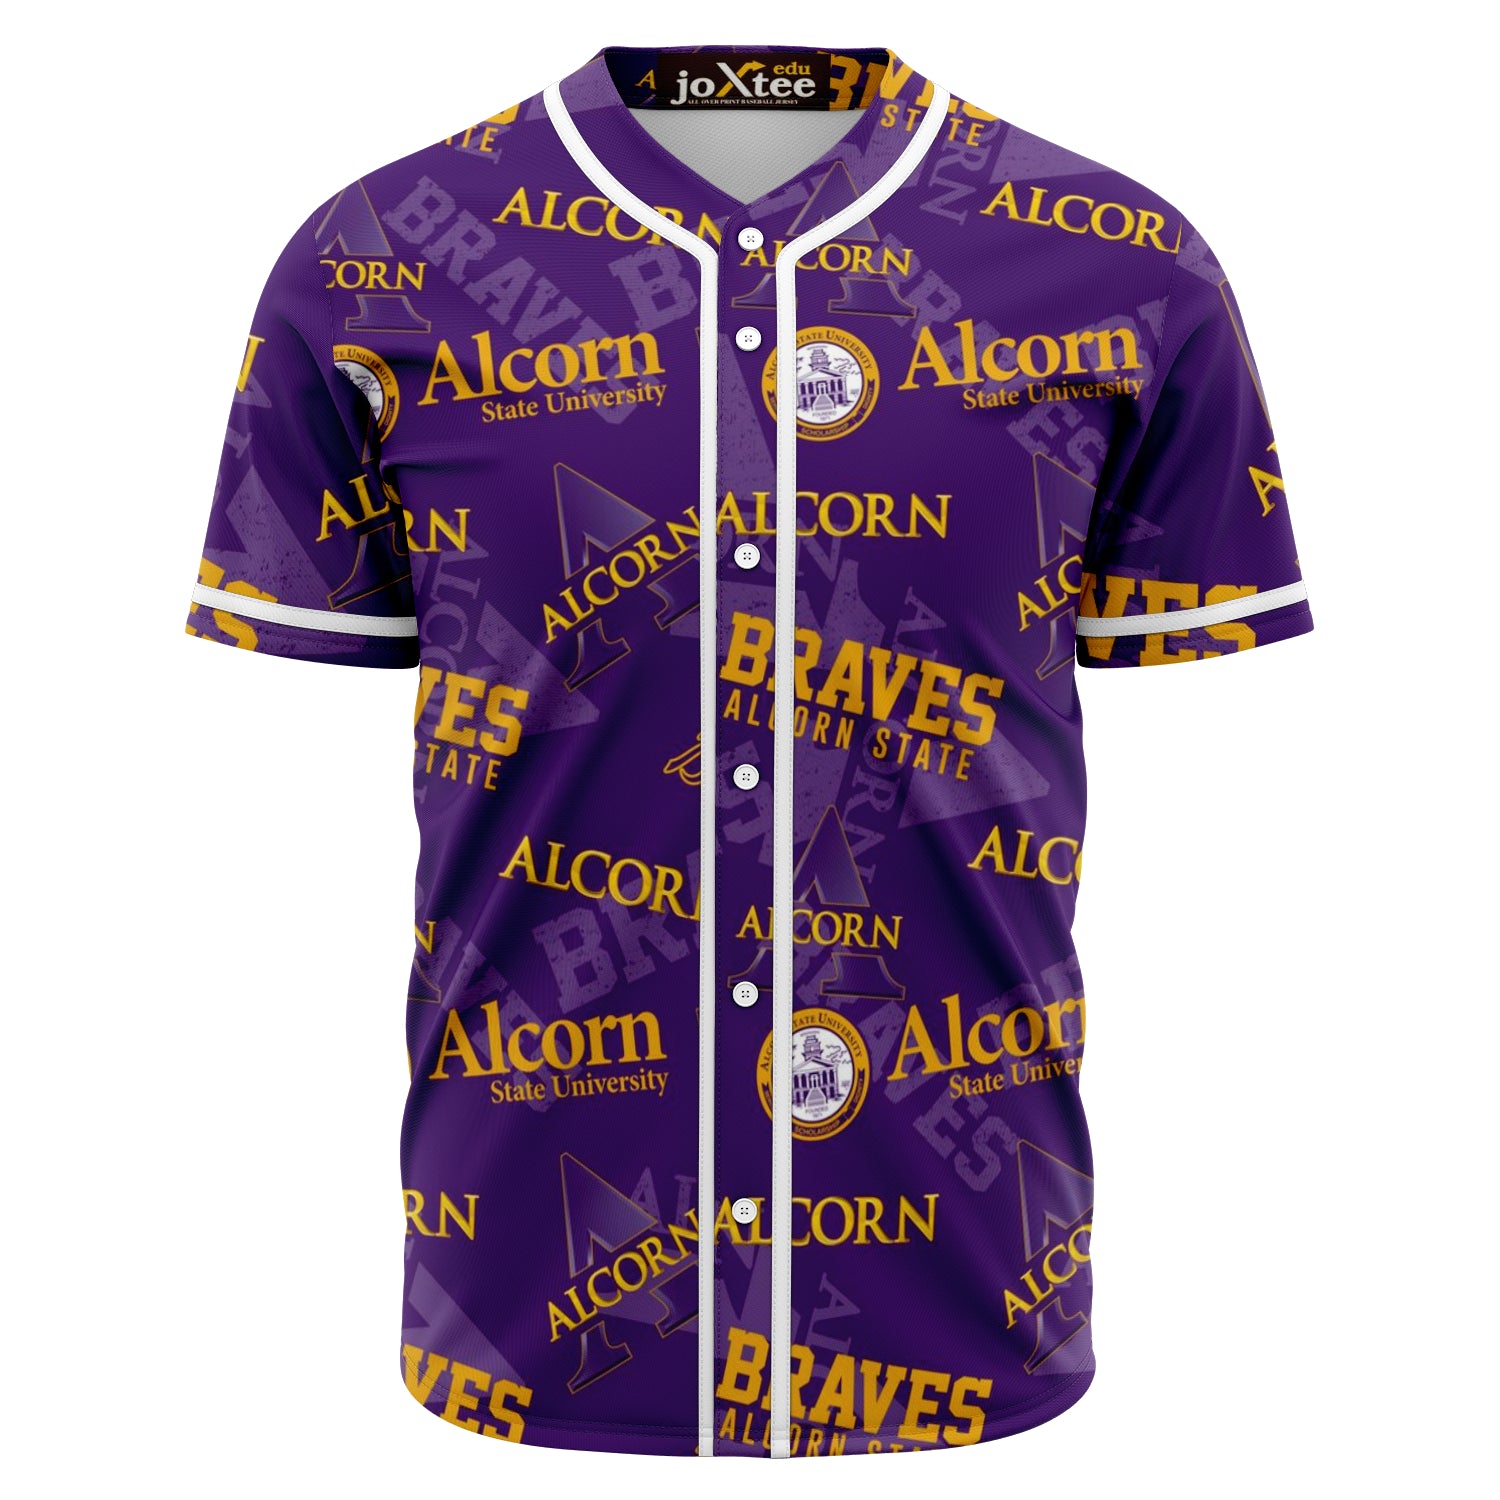 Alcorn Baseball Jersey v59 - joxtee